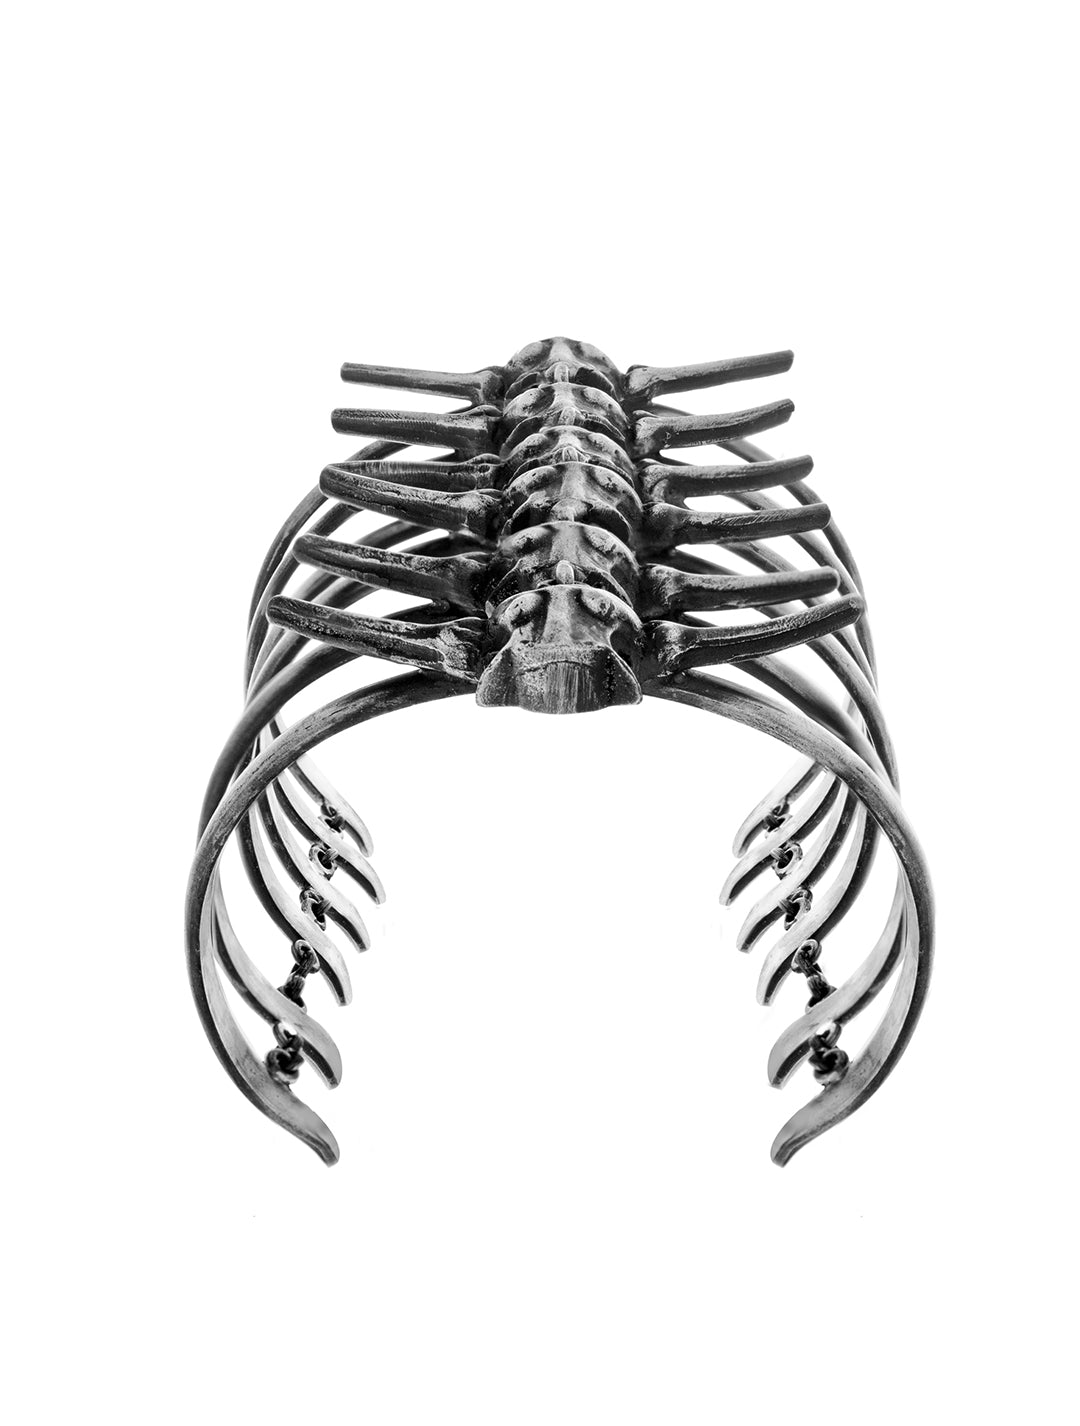 For Mens Stainless Steel Wire Chain Skeleton Skull Cuff Bangle Bracelet Big  | eBay